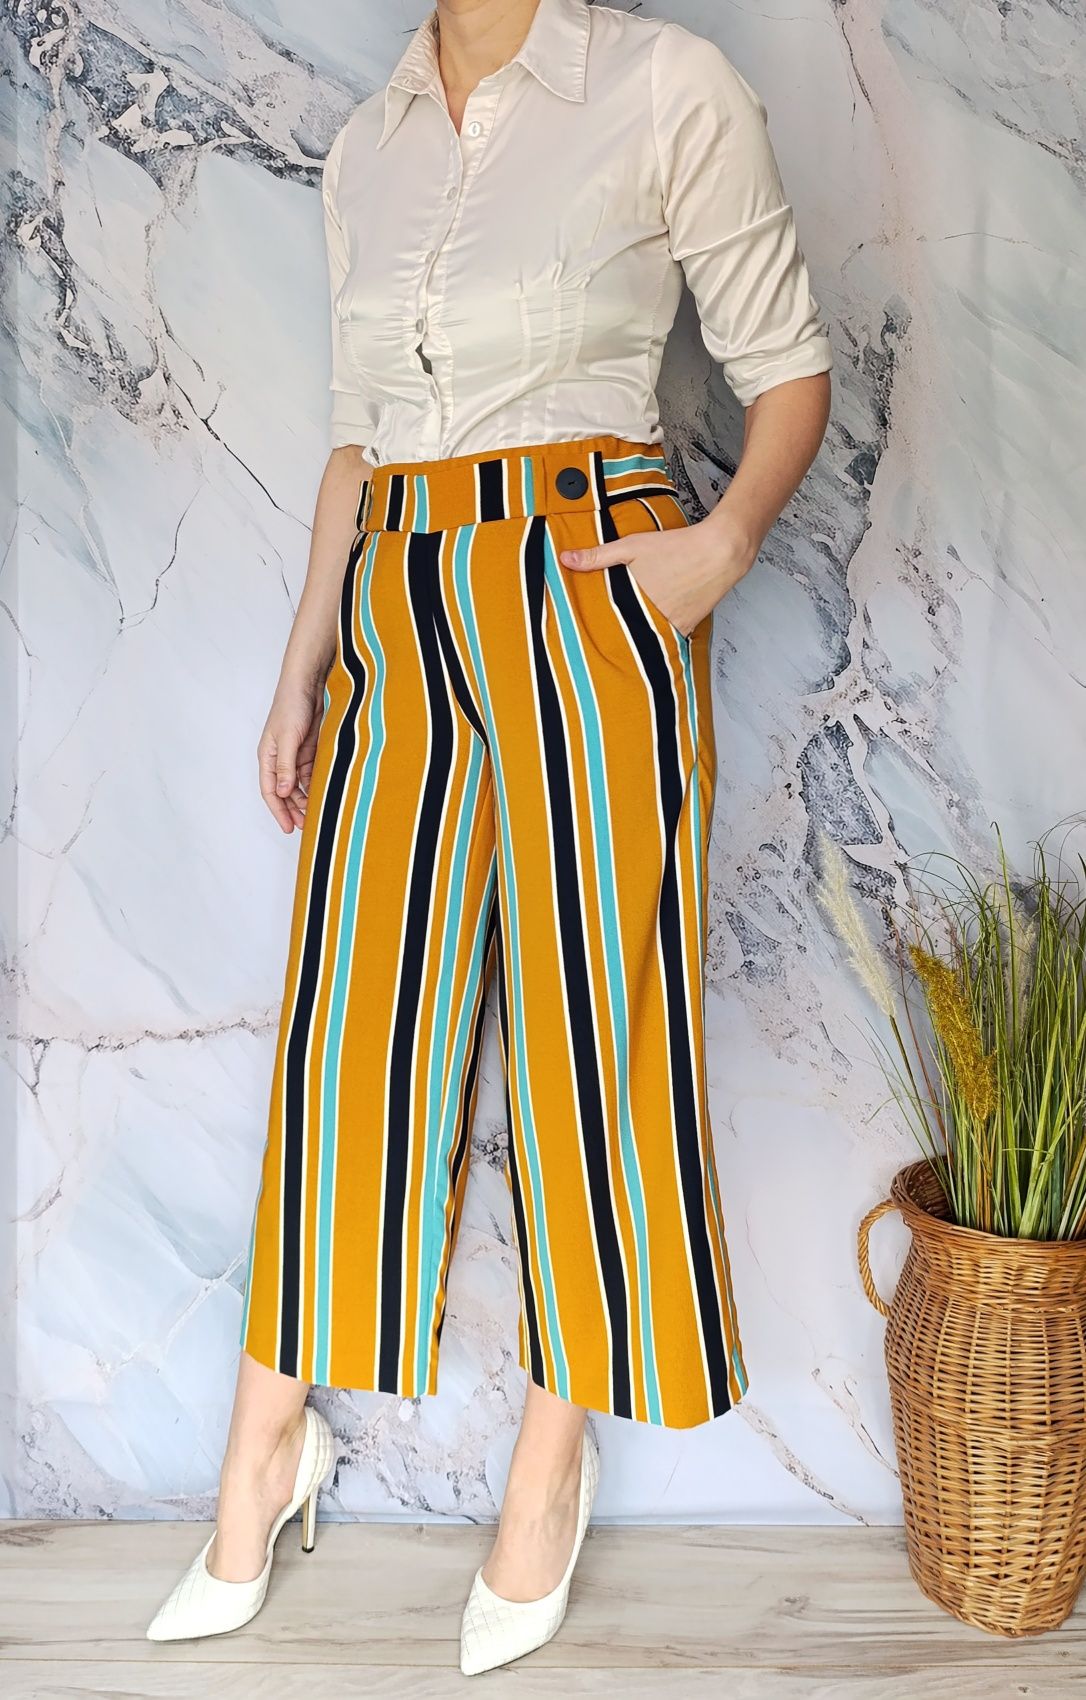 Cudne lekkie szerokie spodnie paski wiosna lato Zara musthave